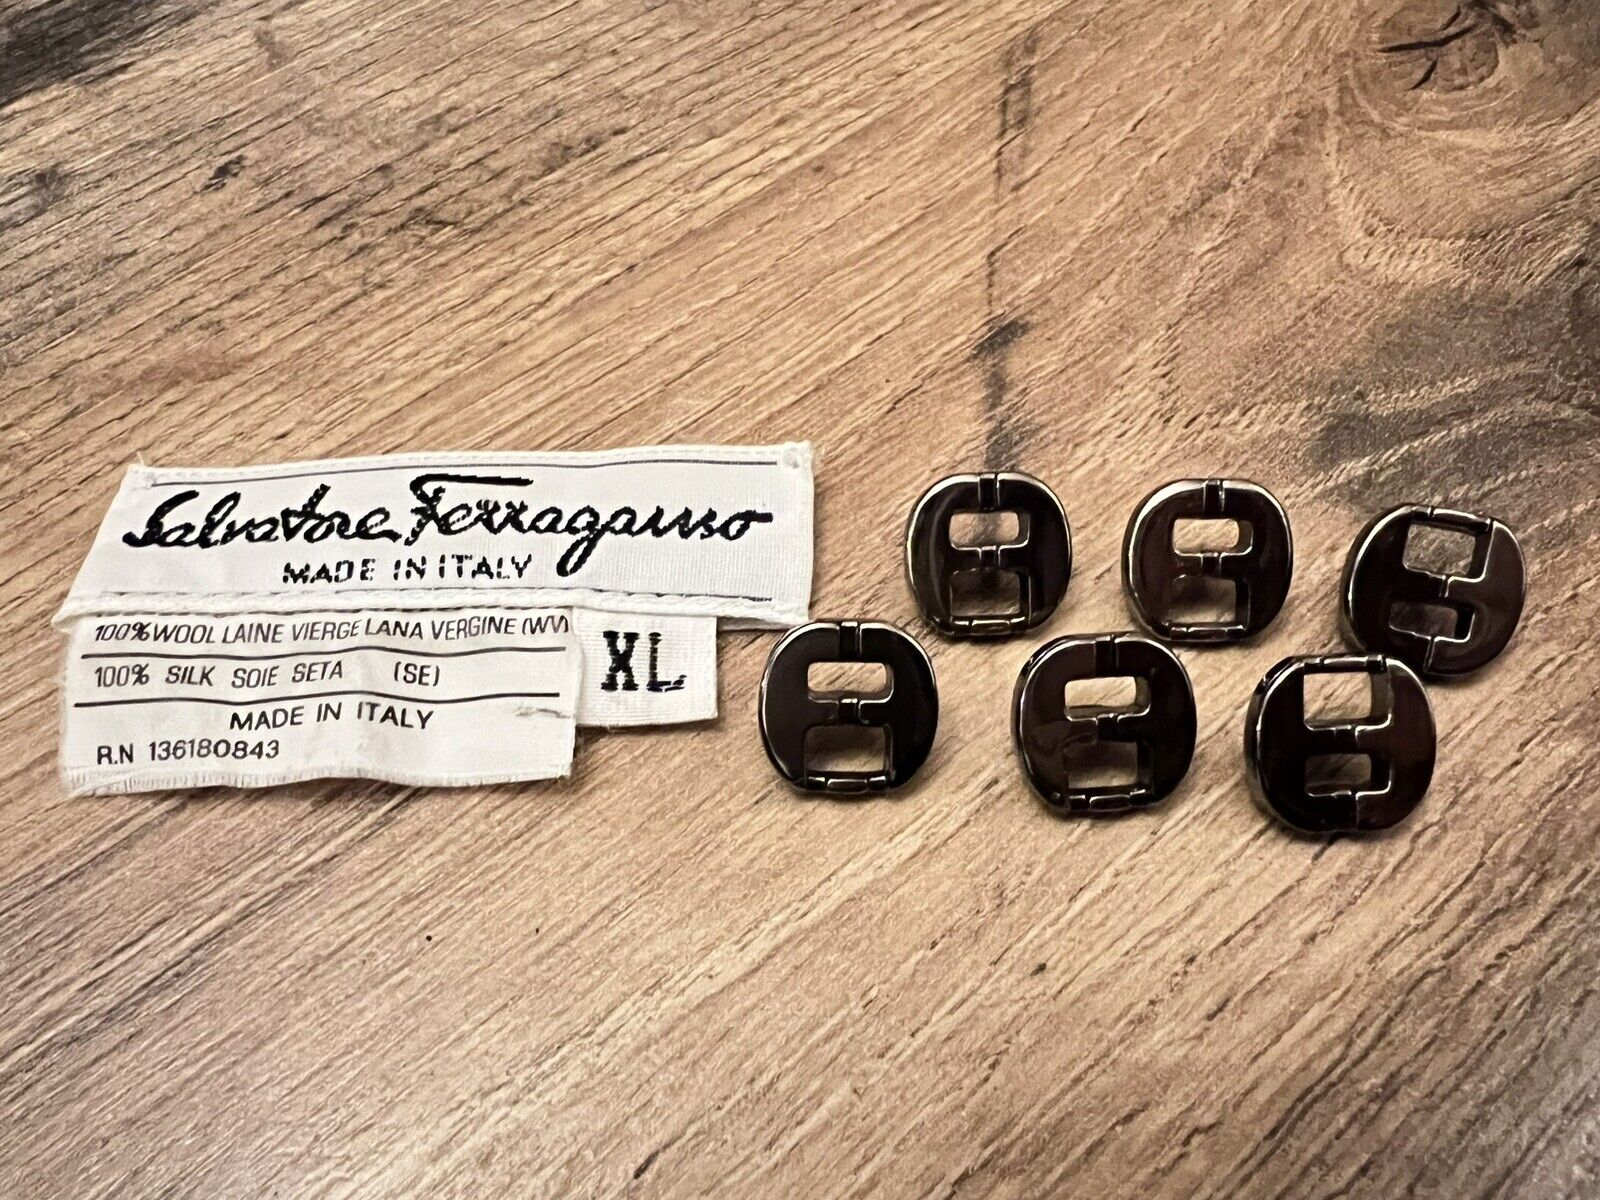 Vintage Salvatore Ferragamo Button • Silver Set Of 6 Buttons With Original Tag